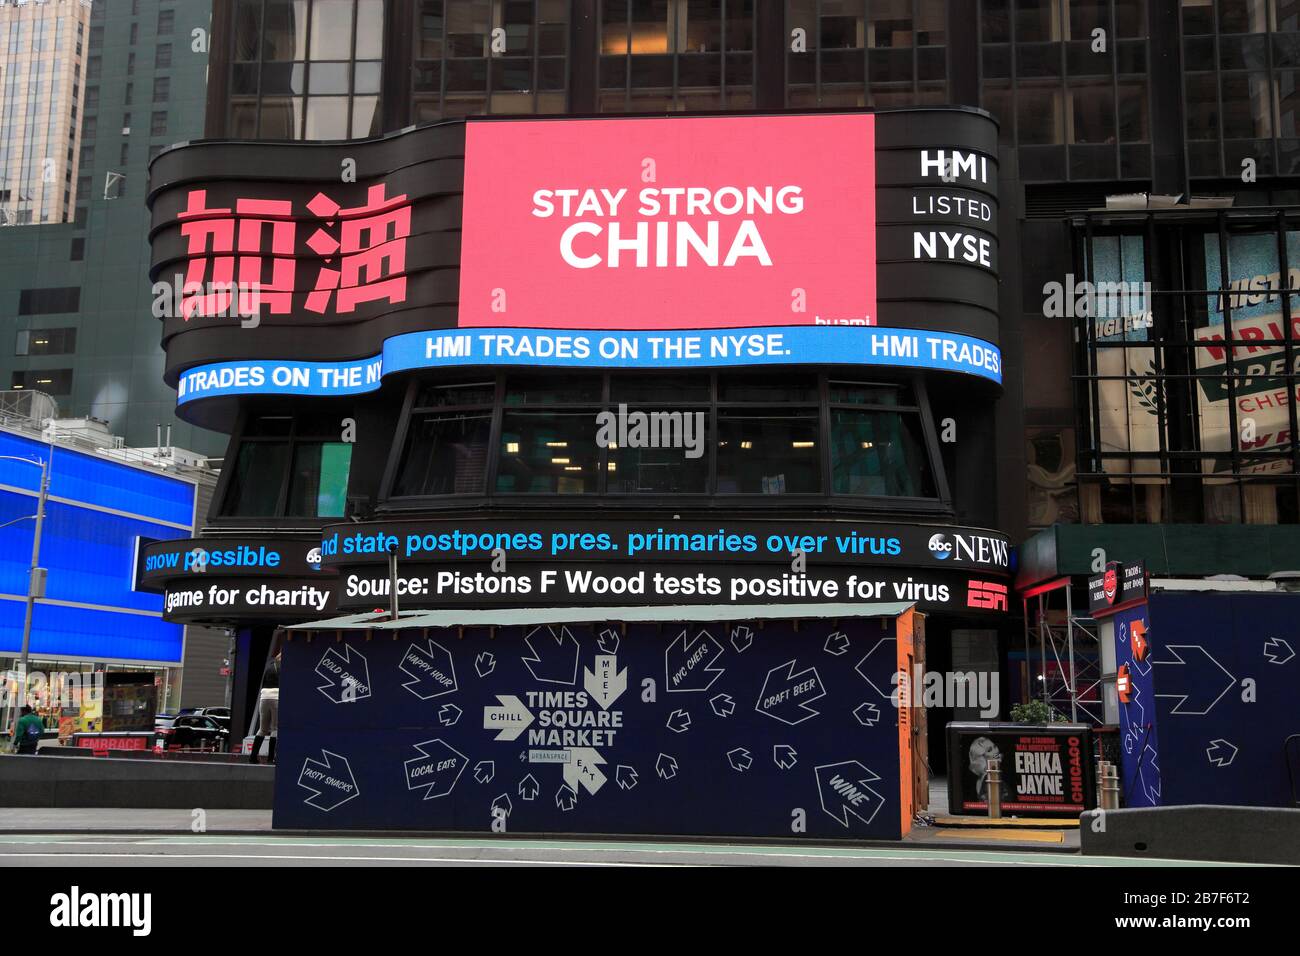 Times Square Huami Corporation, HMI, Billboard Stay String China, News Ticker, Christian Wood Detroit Pistons tests positive coronavirus NYC 3/15 2020 Stock Photo